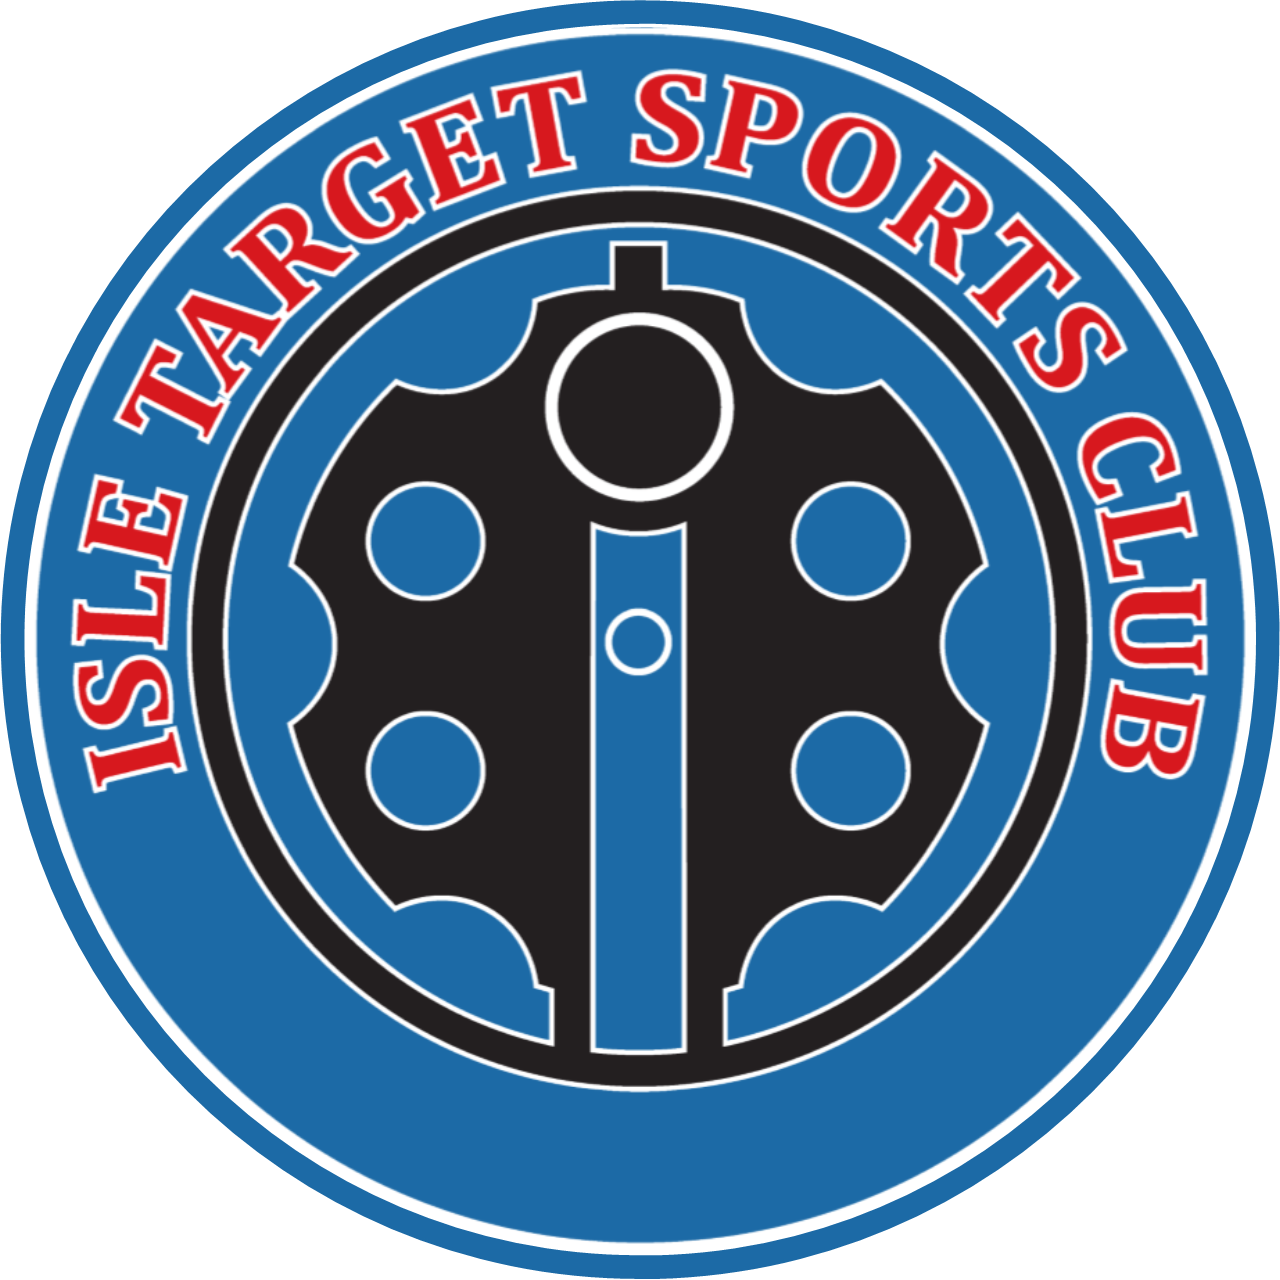 ISLE TARGET SPORTS CLUB